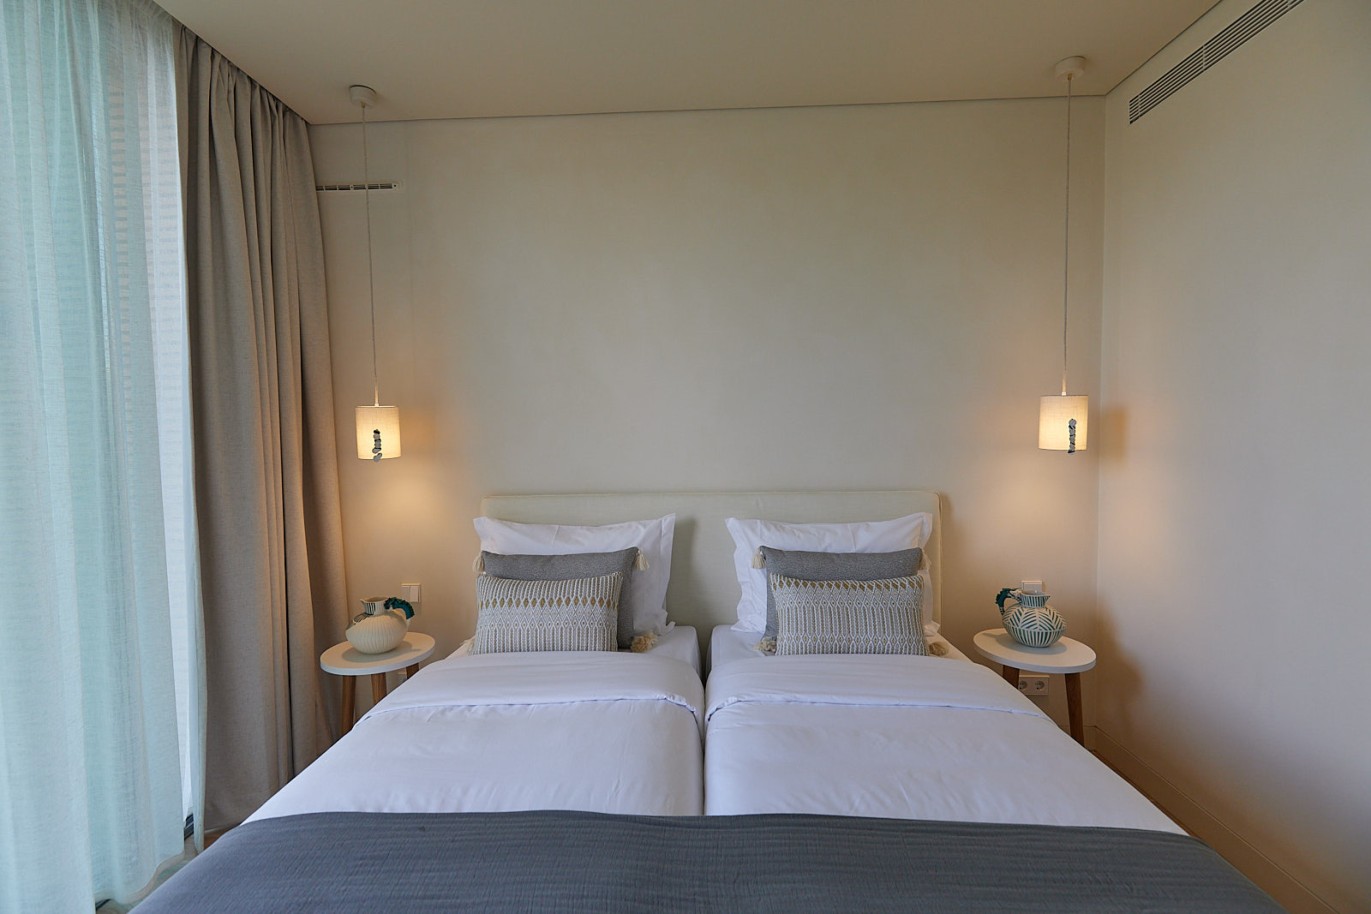 2 bedroom apartment in resort, for sale in Porches, Algarve_230587